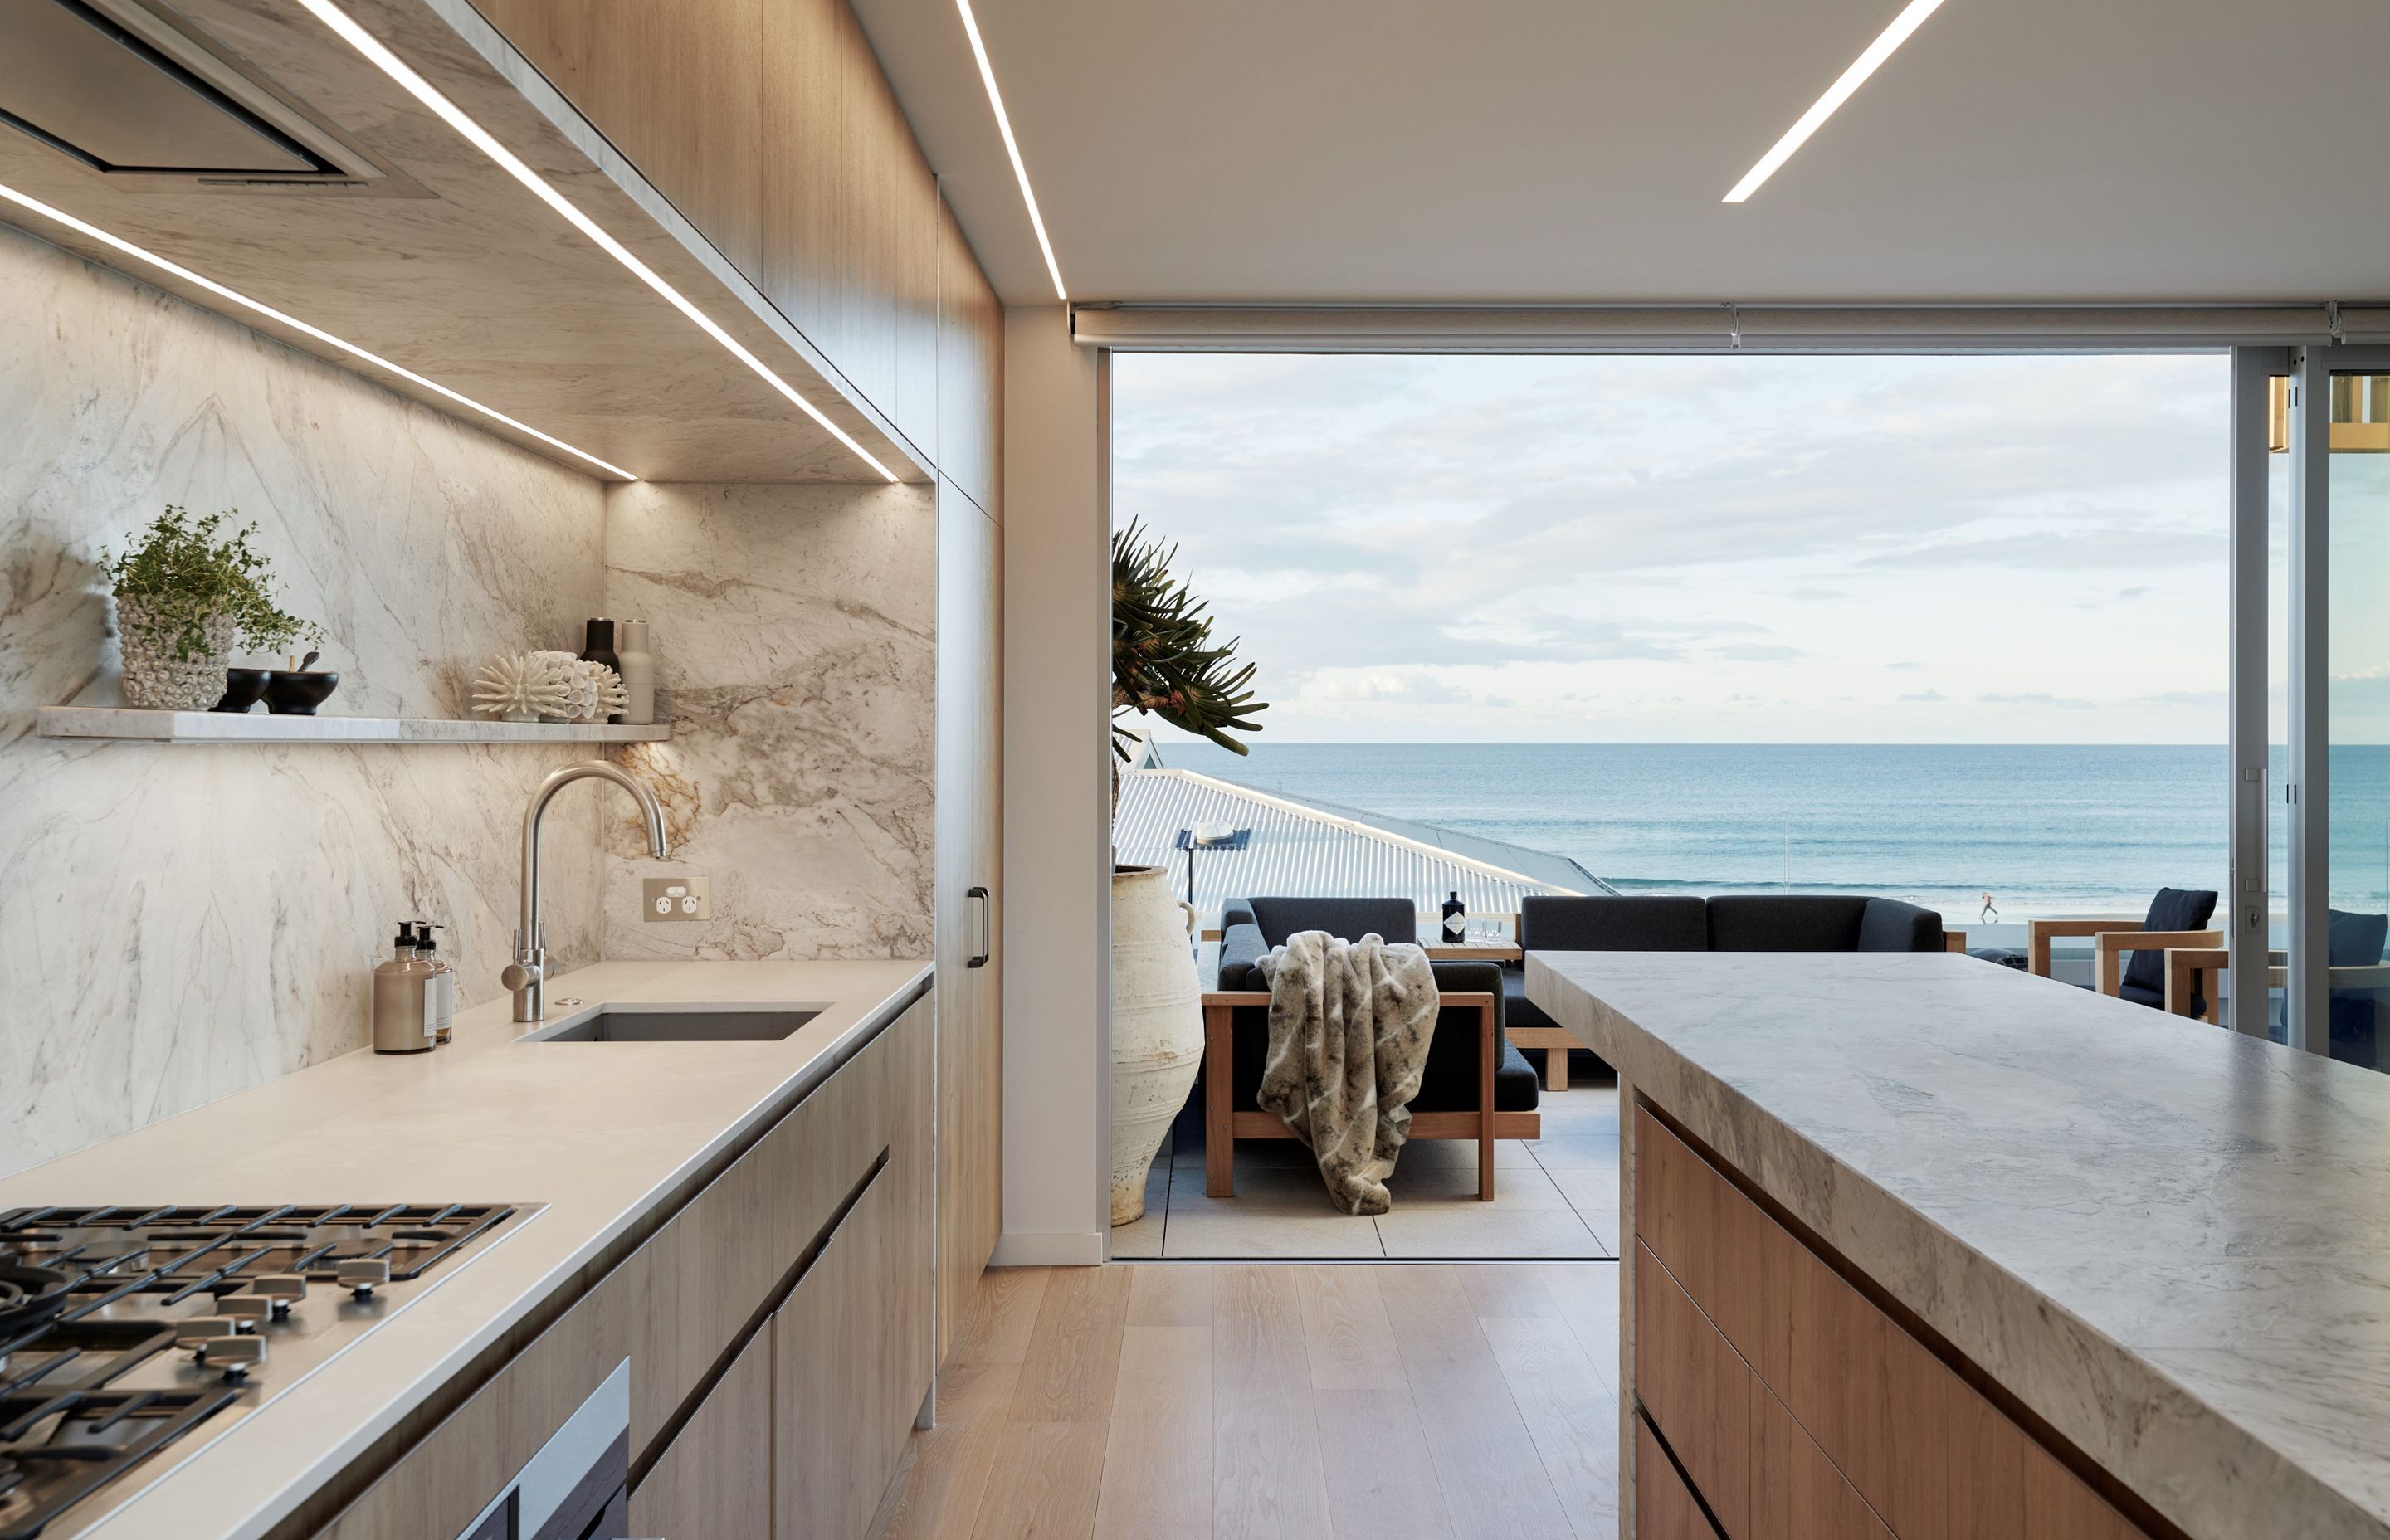 2020 SUPREME Kitchen Design of the Year